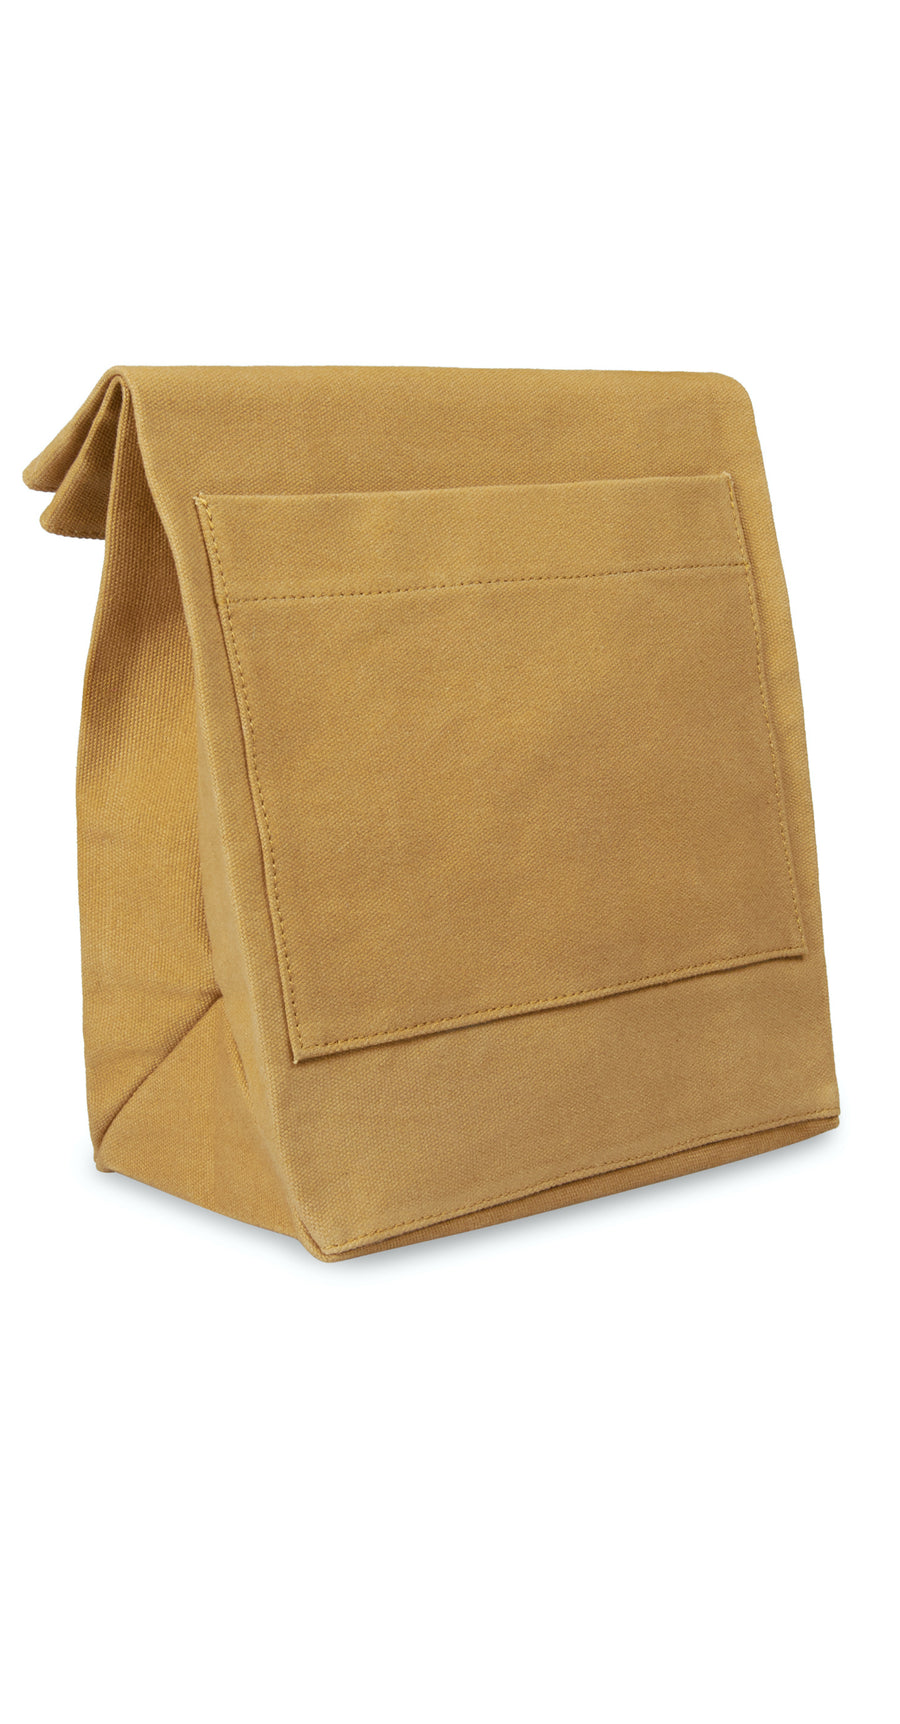 Moraltive Lunch Bags - Khaki